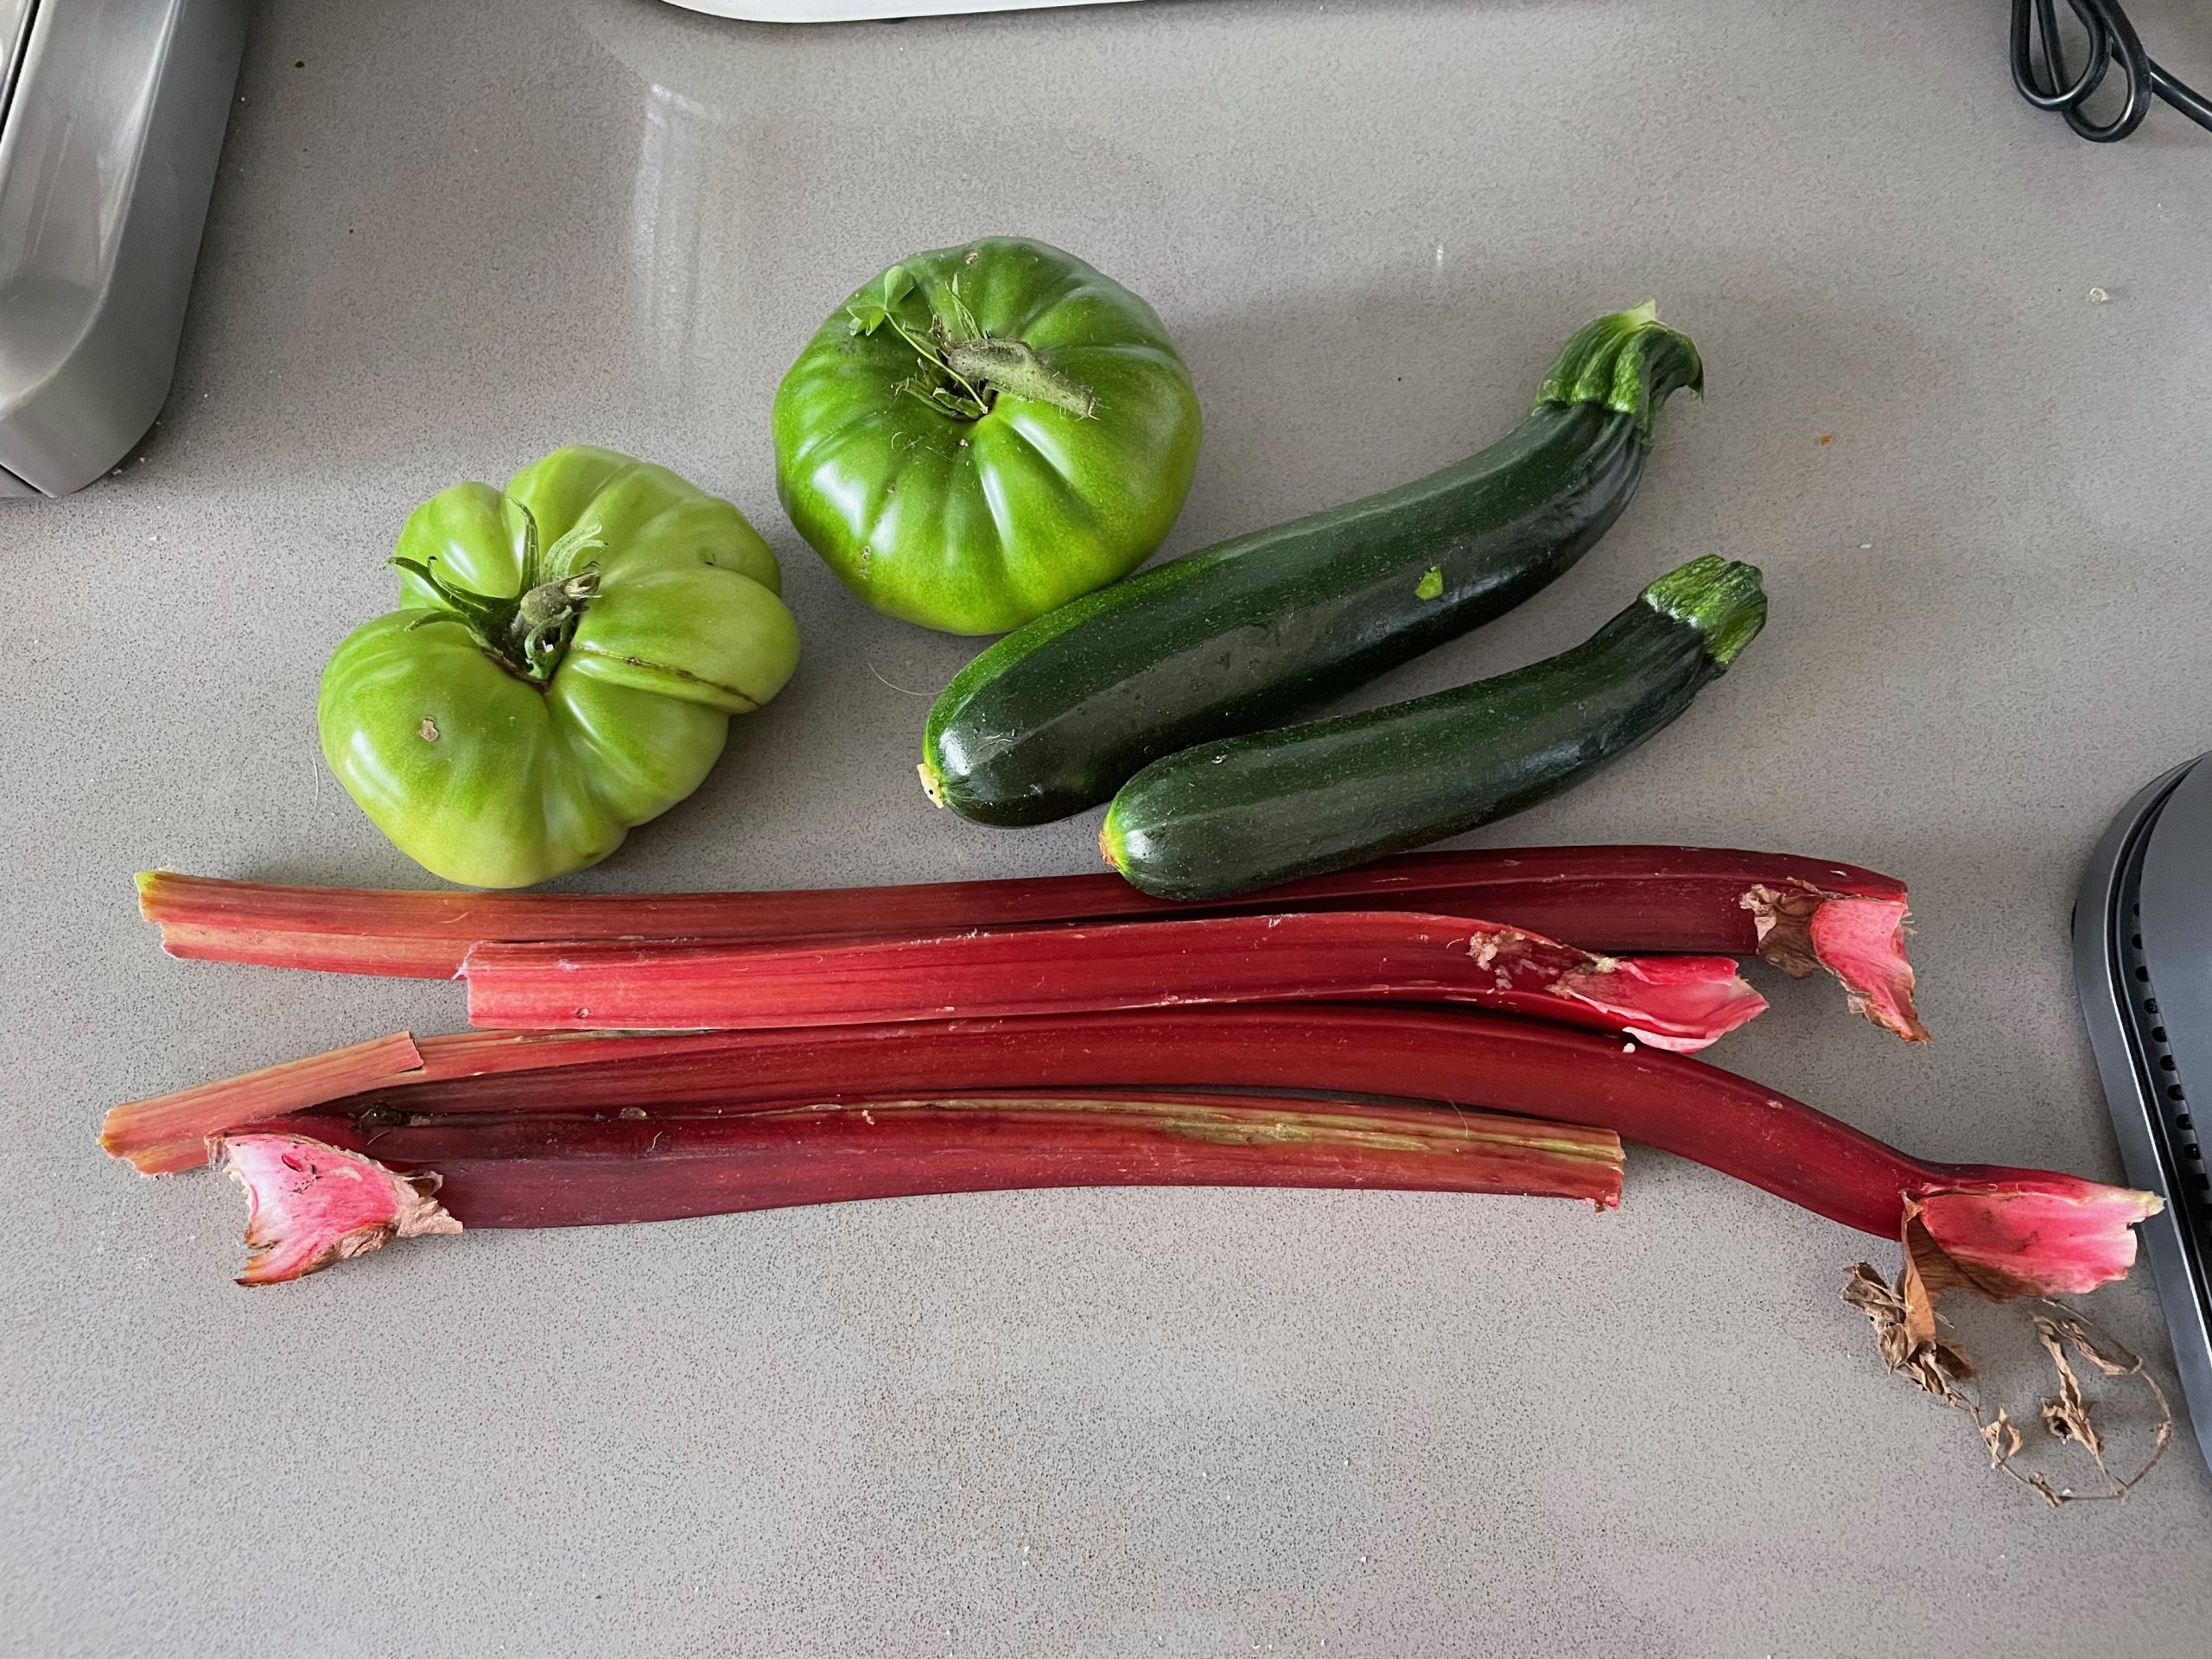 Unripe black russian tomato, zuchinni, rhubarb